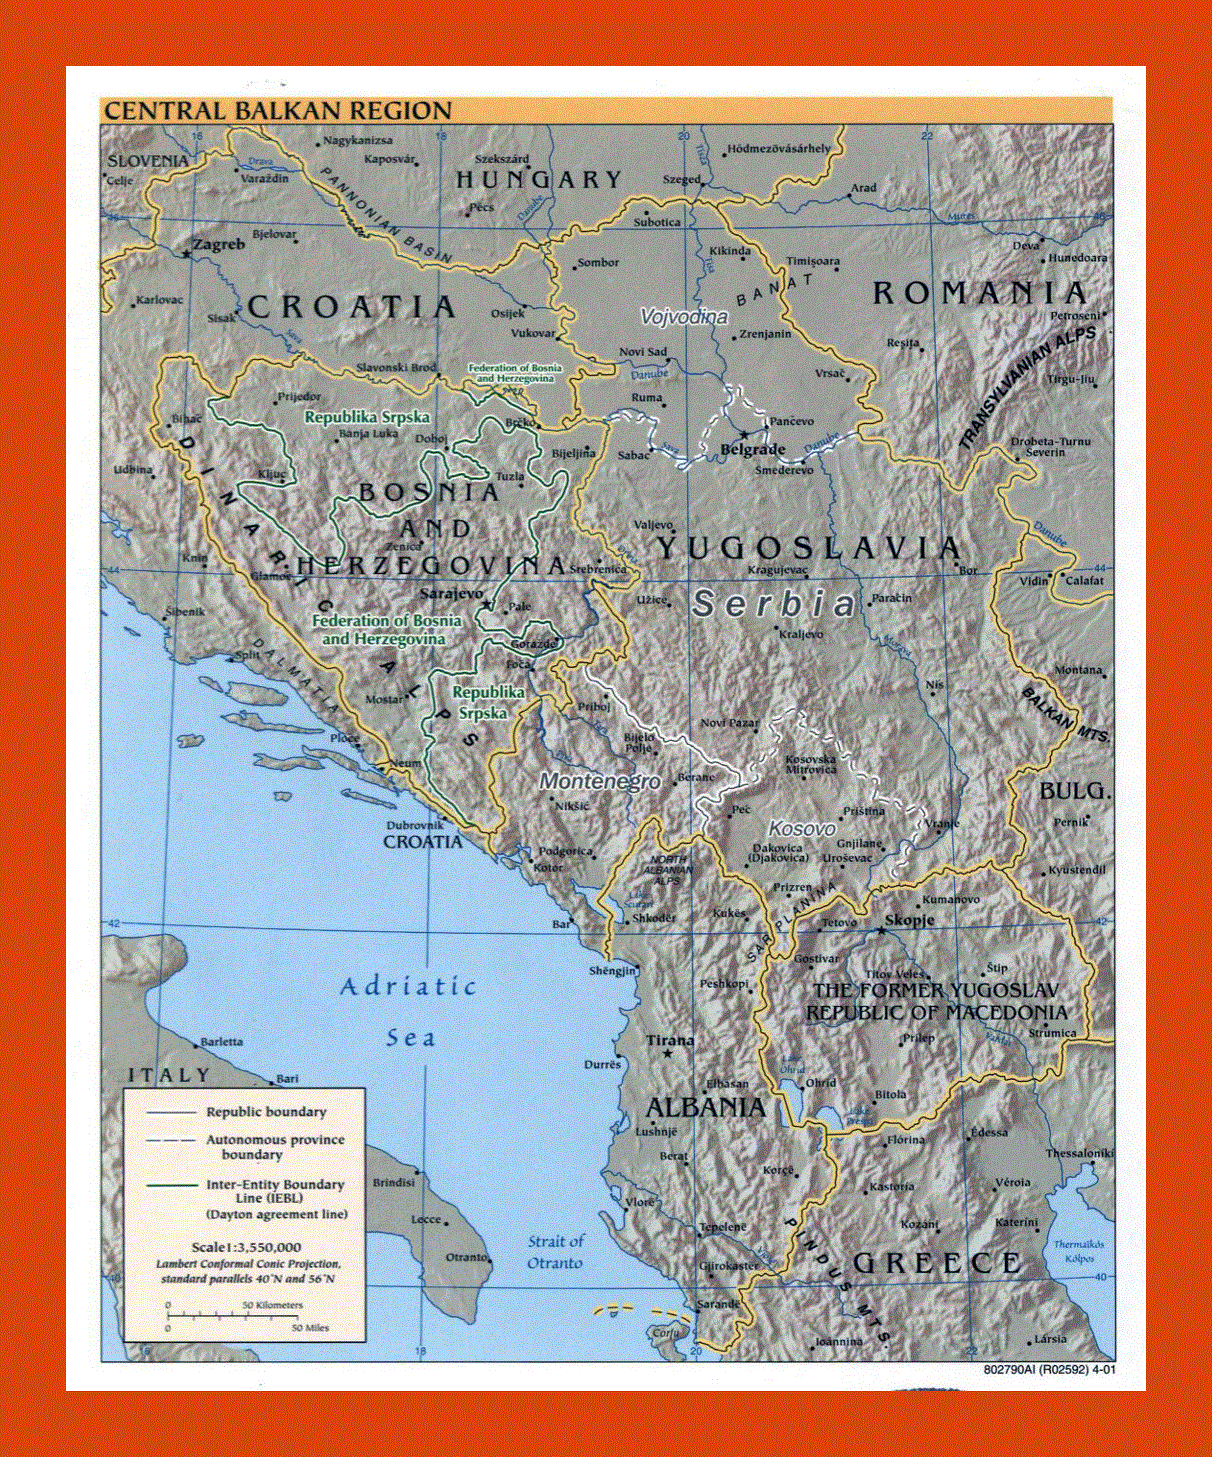 Political map of Central Balkan Region - 2001